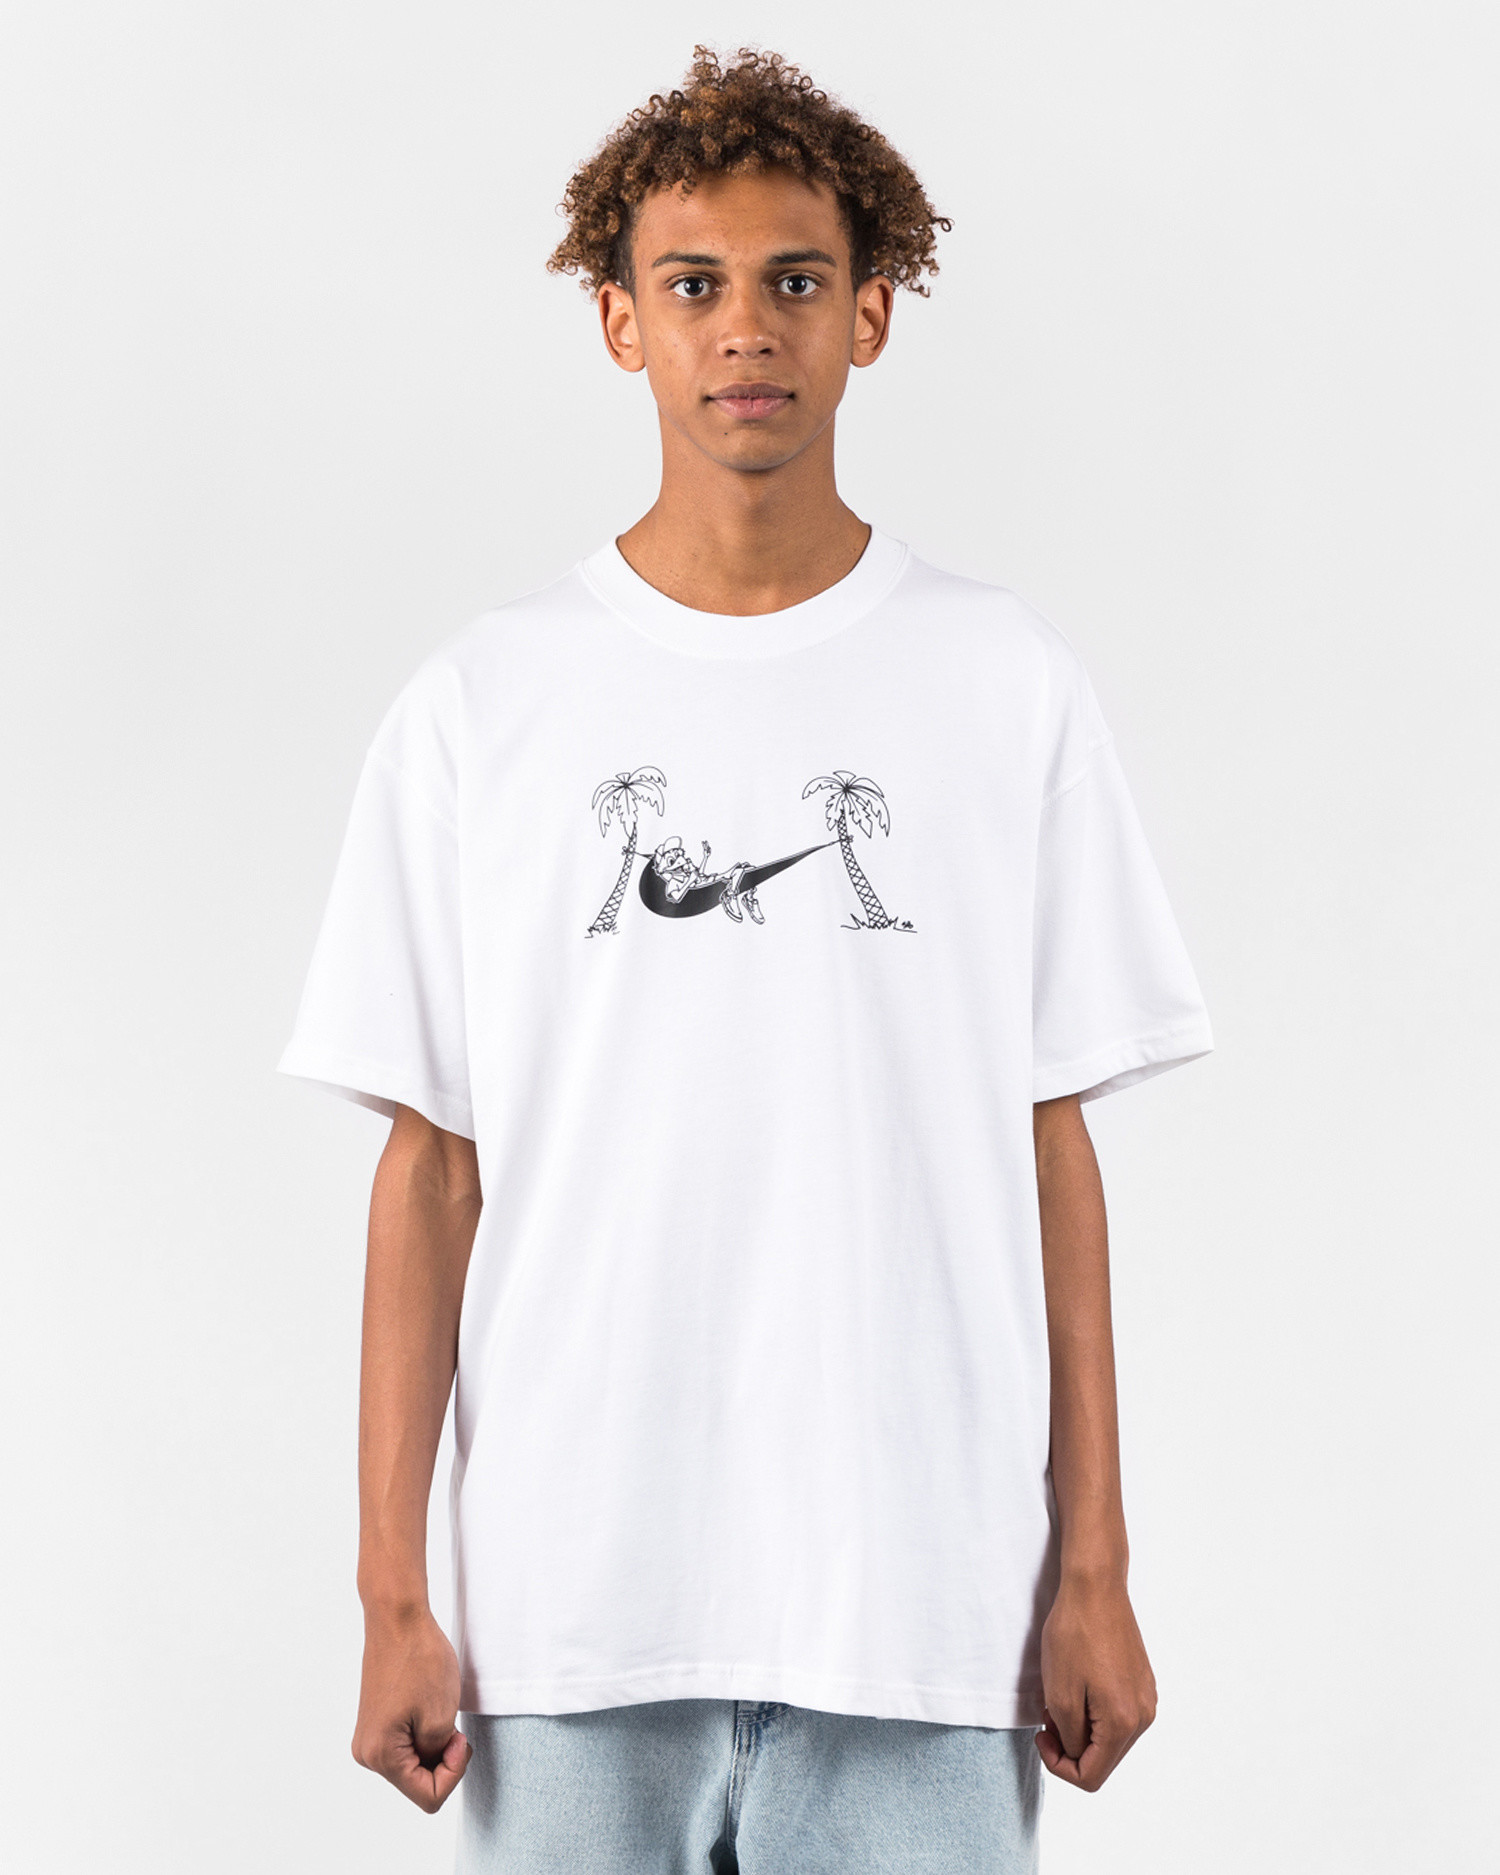 Nike SB T-shirt White/Black - Lockwood 